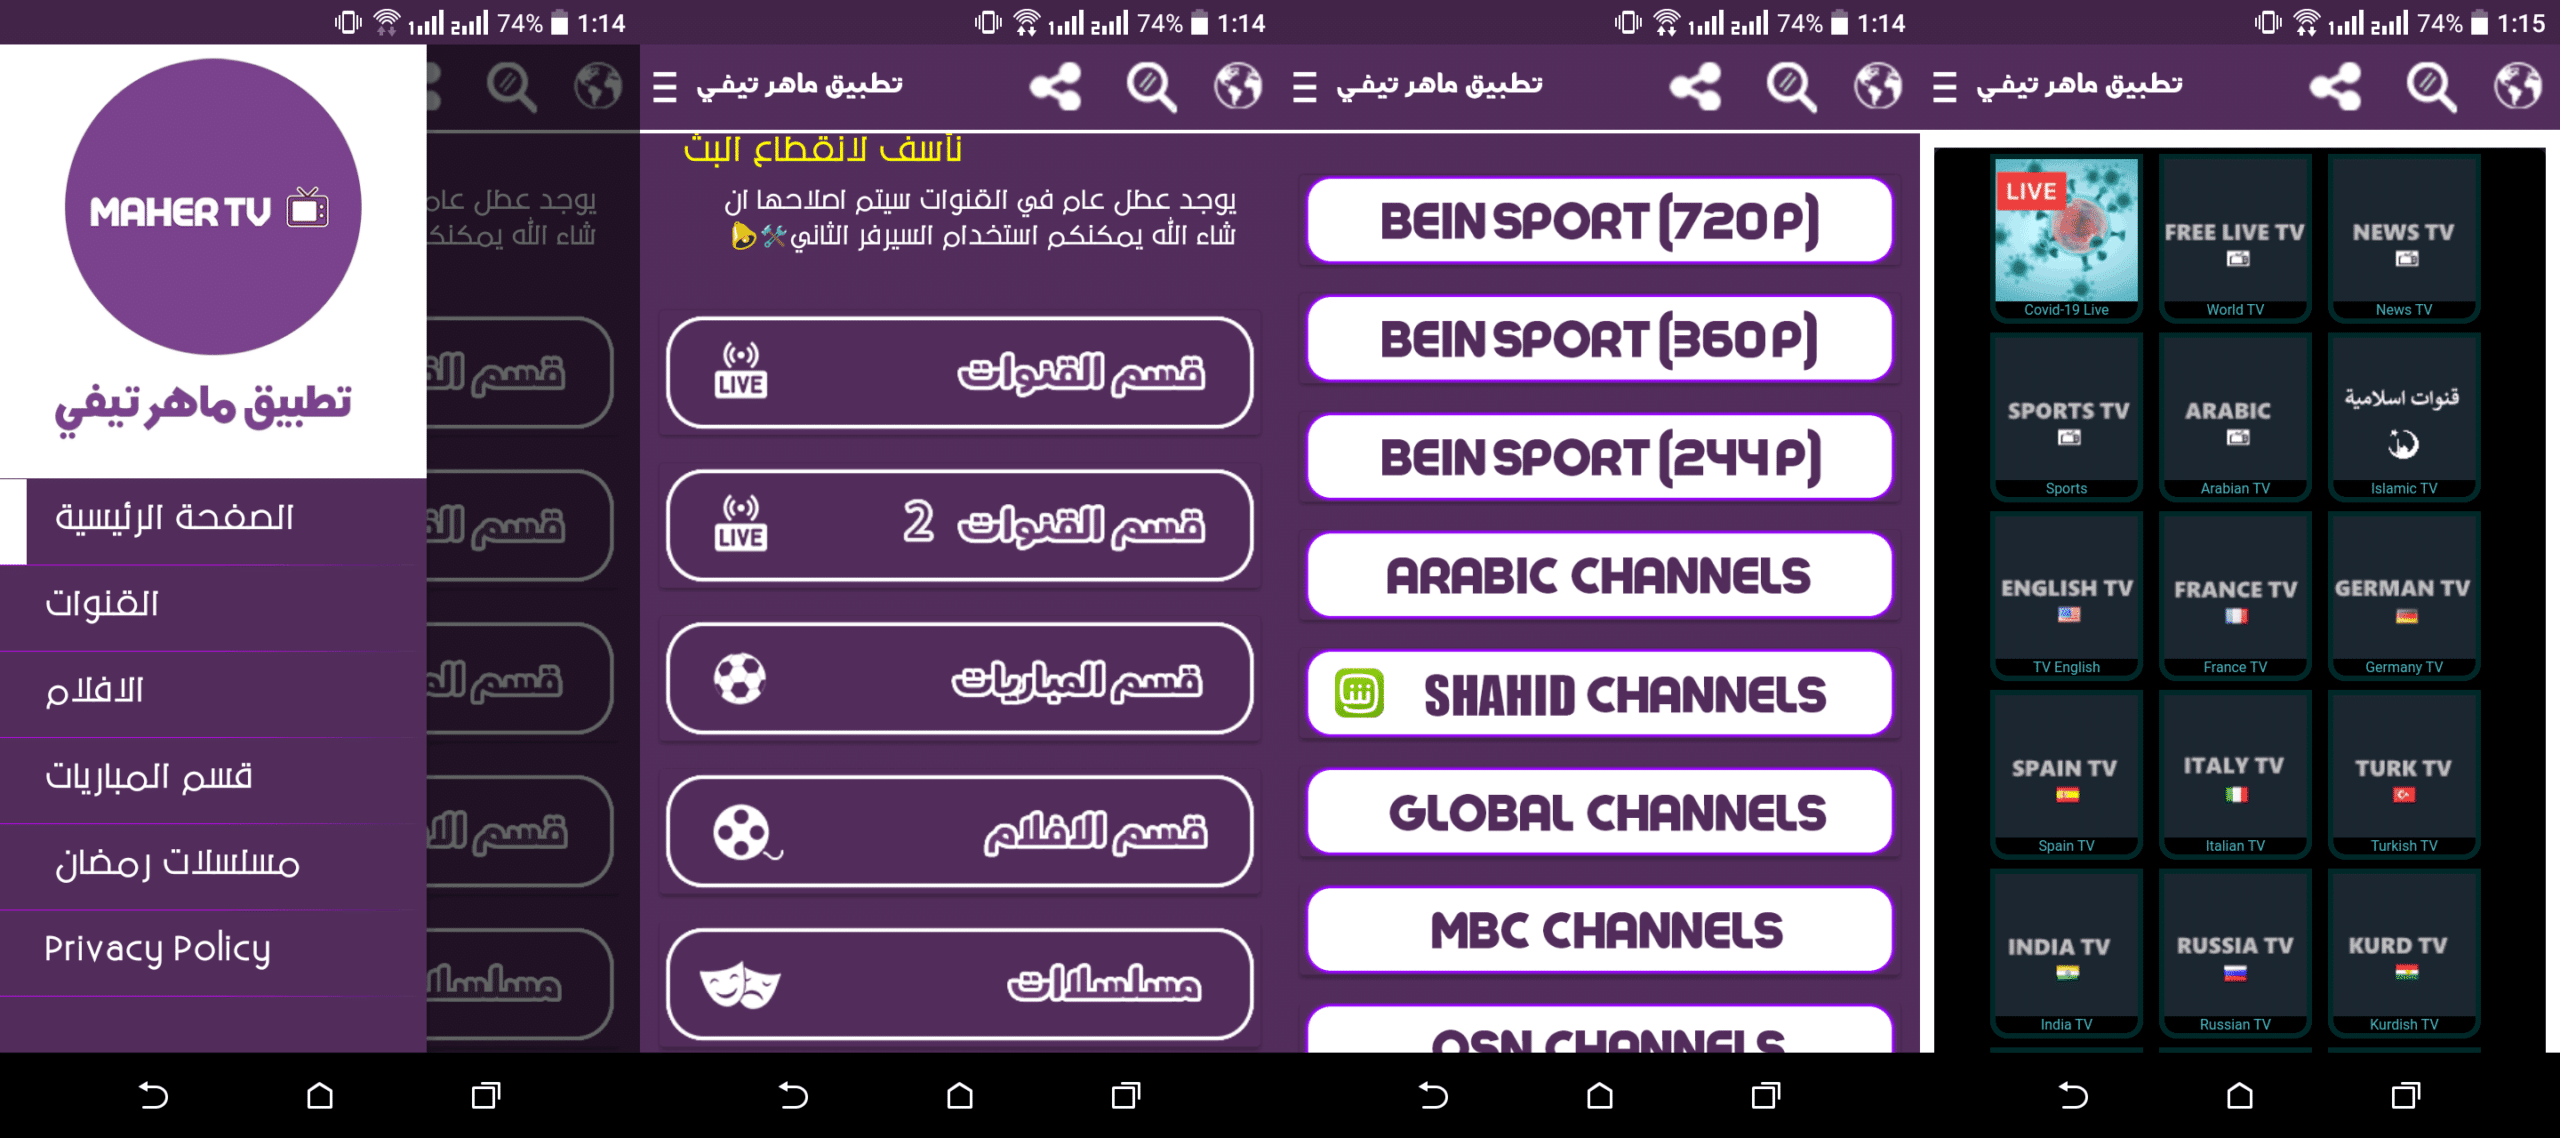 Mahar tv Pro apk [Latest] 2020 Android 2